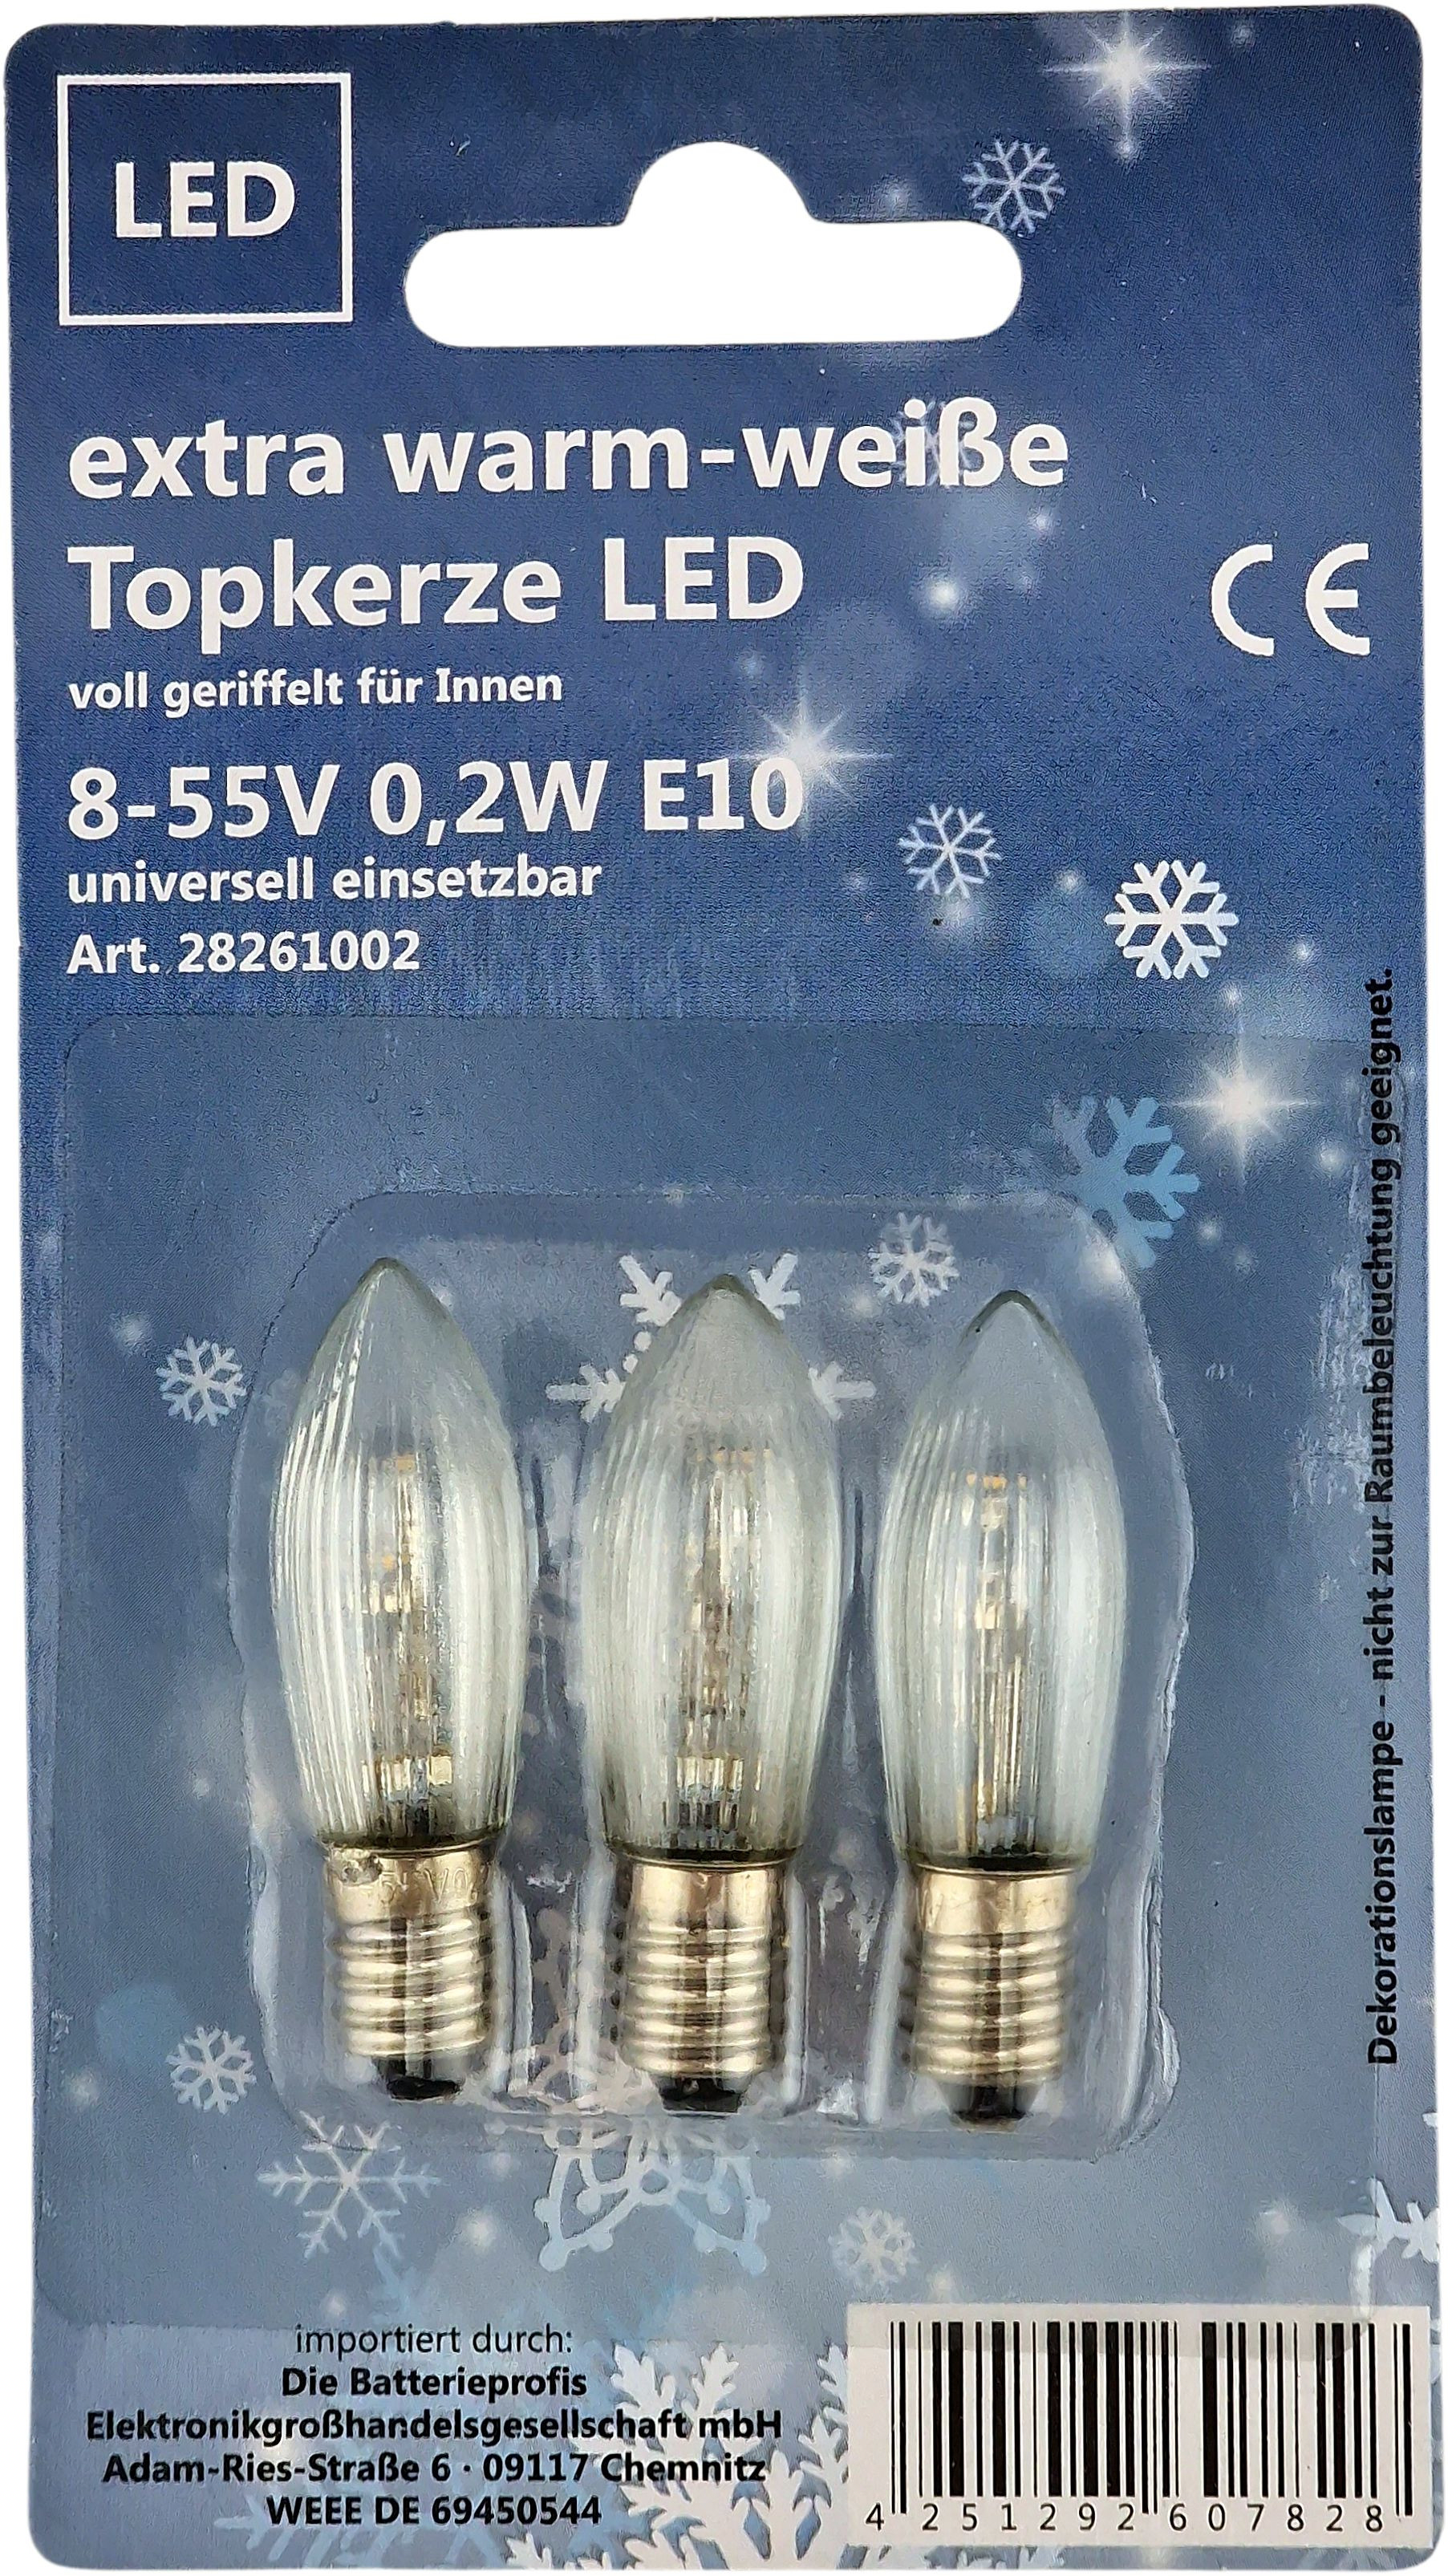 LED Topkerzen extra warmweiss 8-55V 0,2W E10 